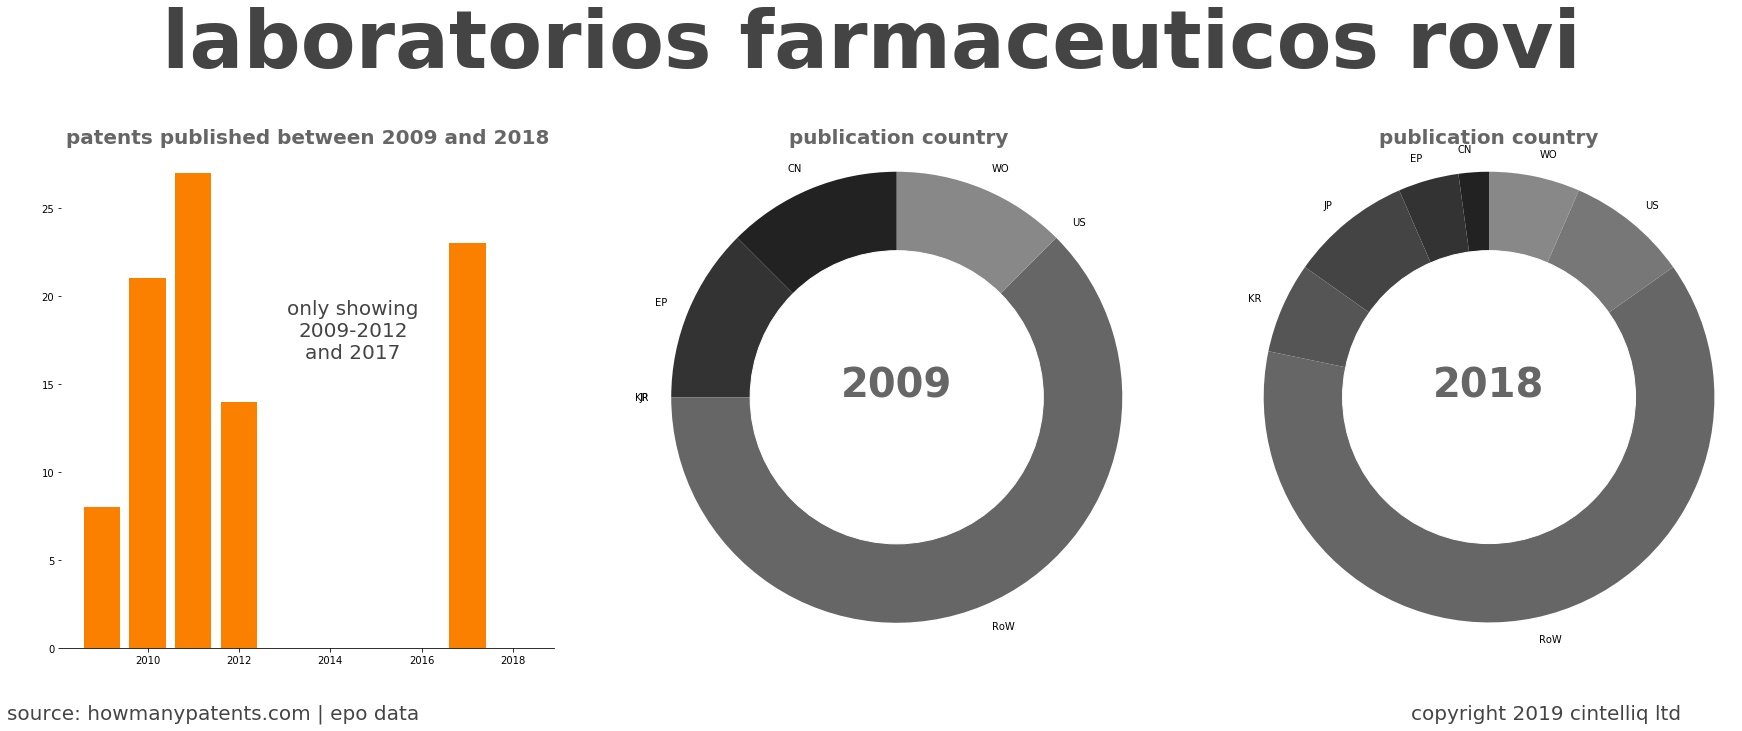 summary of patents for Laboratorios Farmaceuticos Rovi